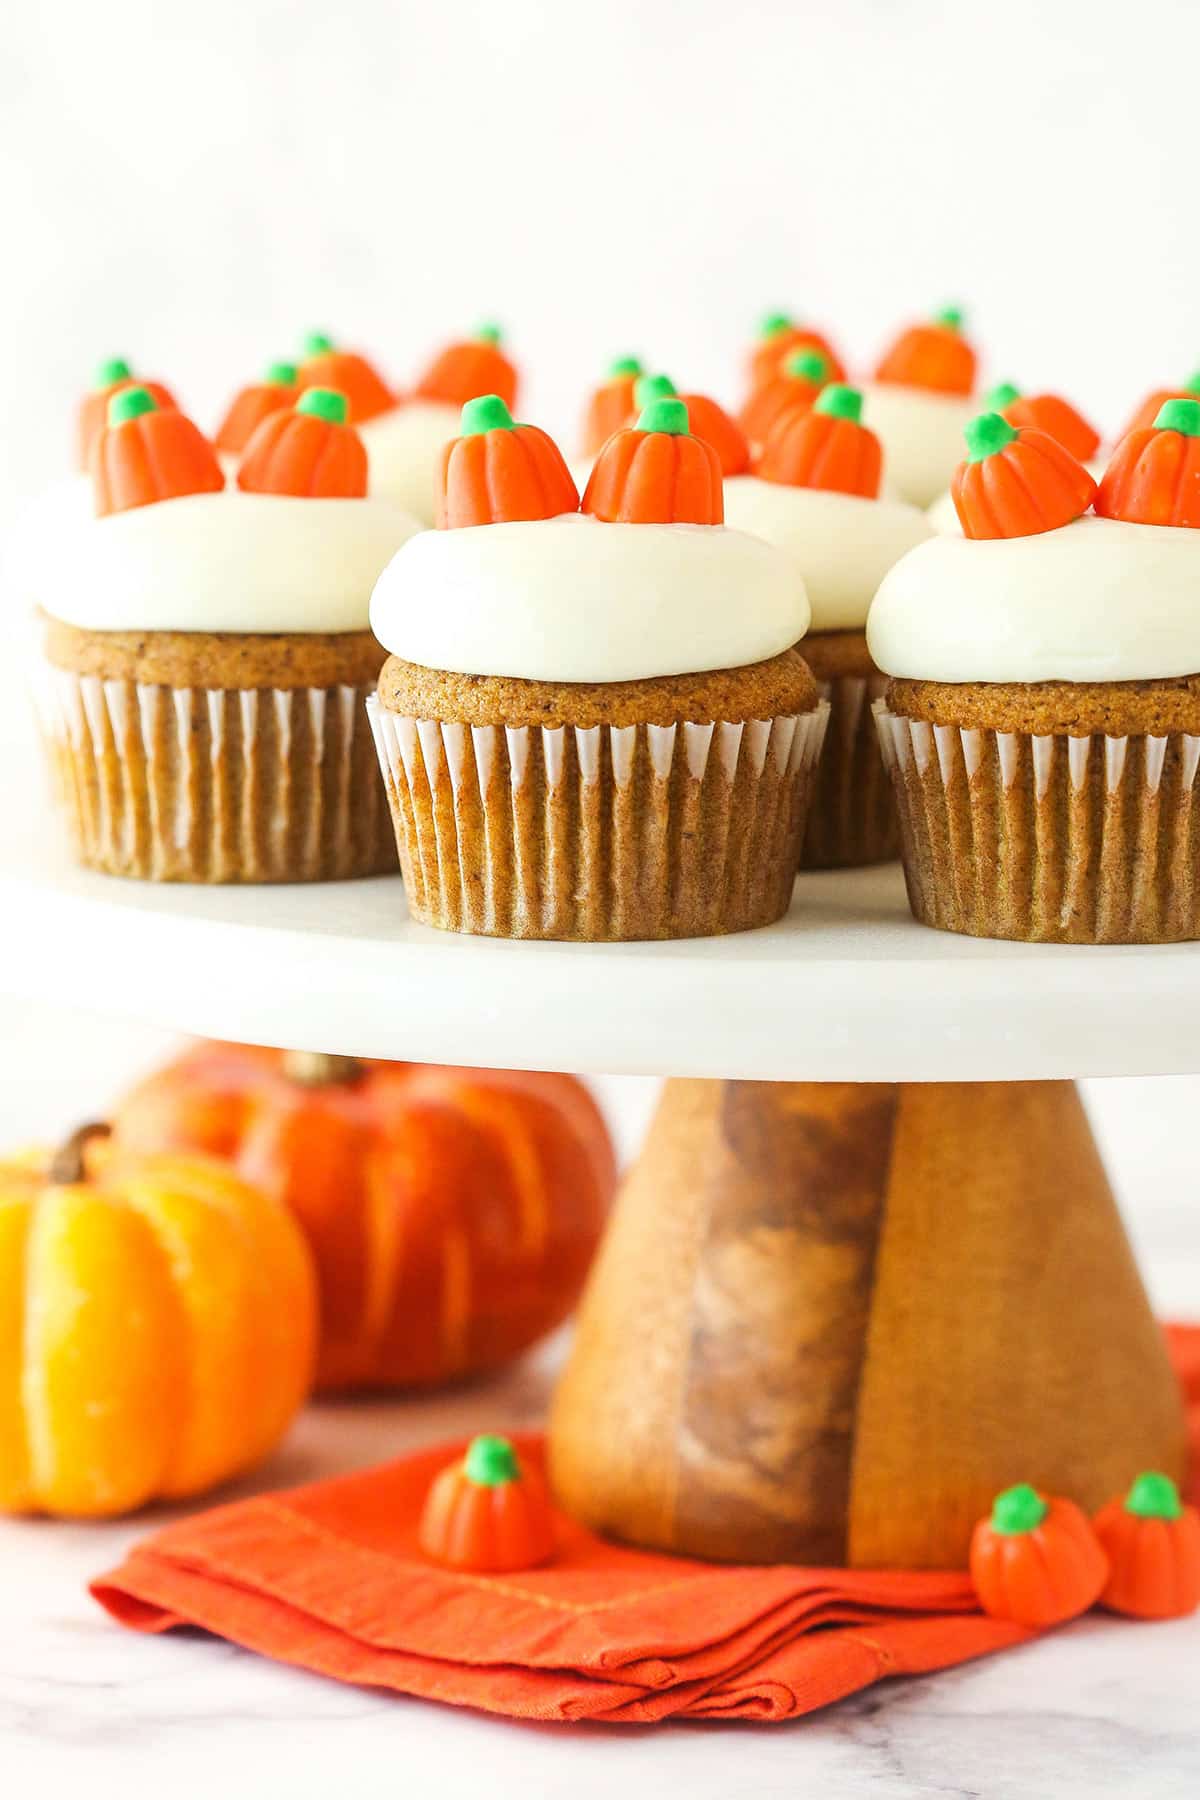 Pumpkin cupcakes on a cake stand near small pumpkins and pumpkin candies.